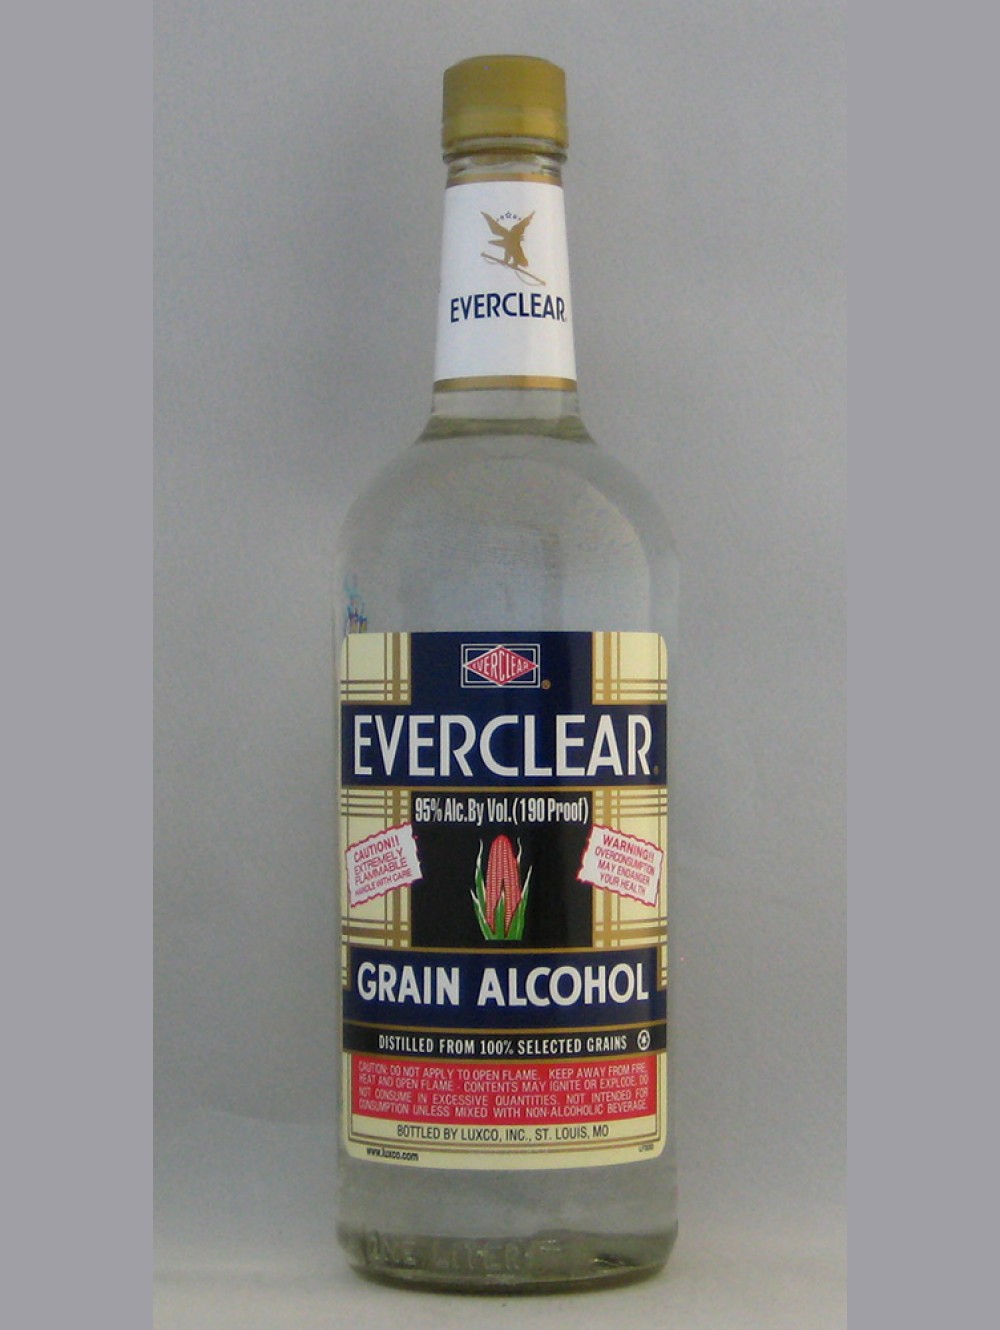 Everclear 190 (proof) vodka grain alcohol straight vodka 1.0L. 